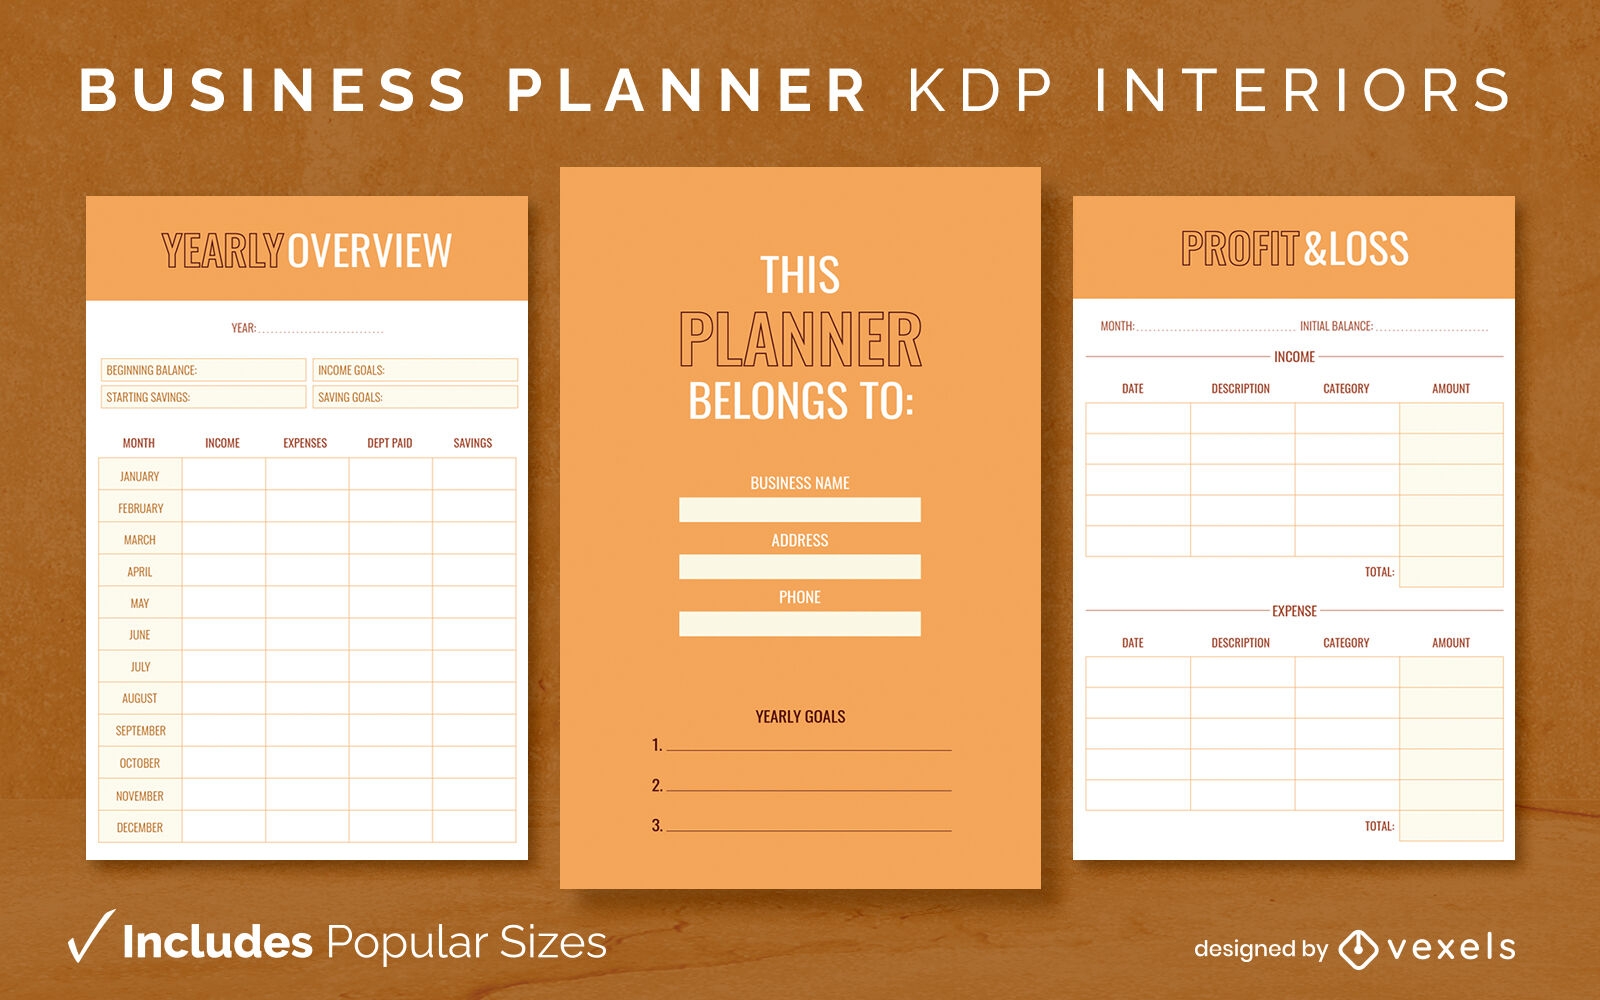 Address Book Diary Template KDP Interior Design Vector Download